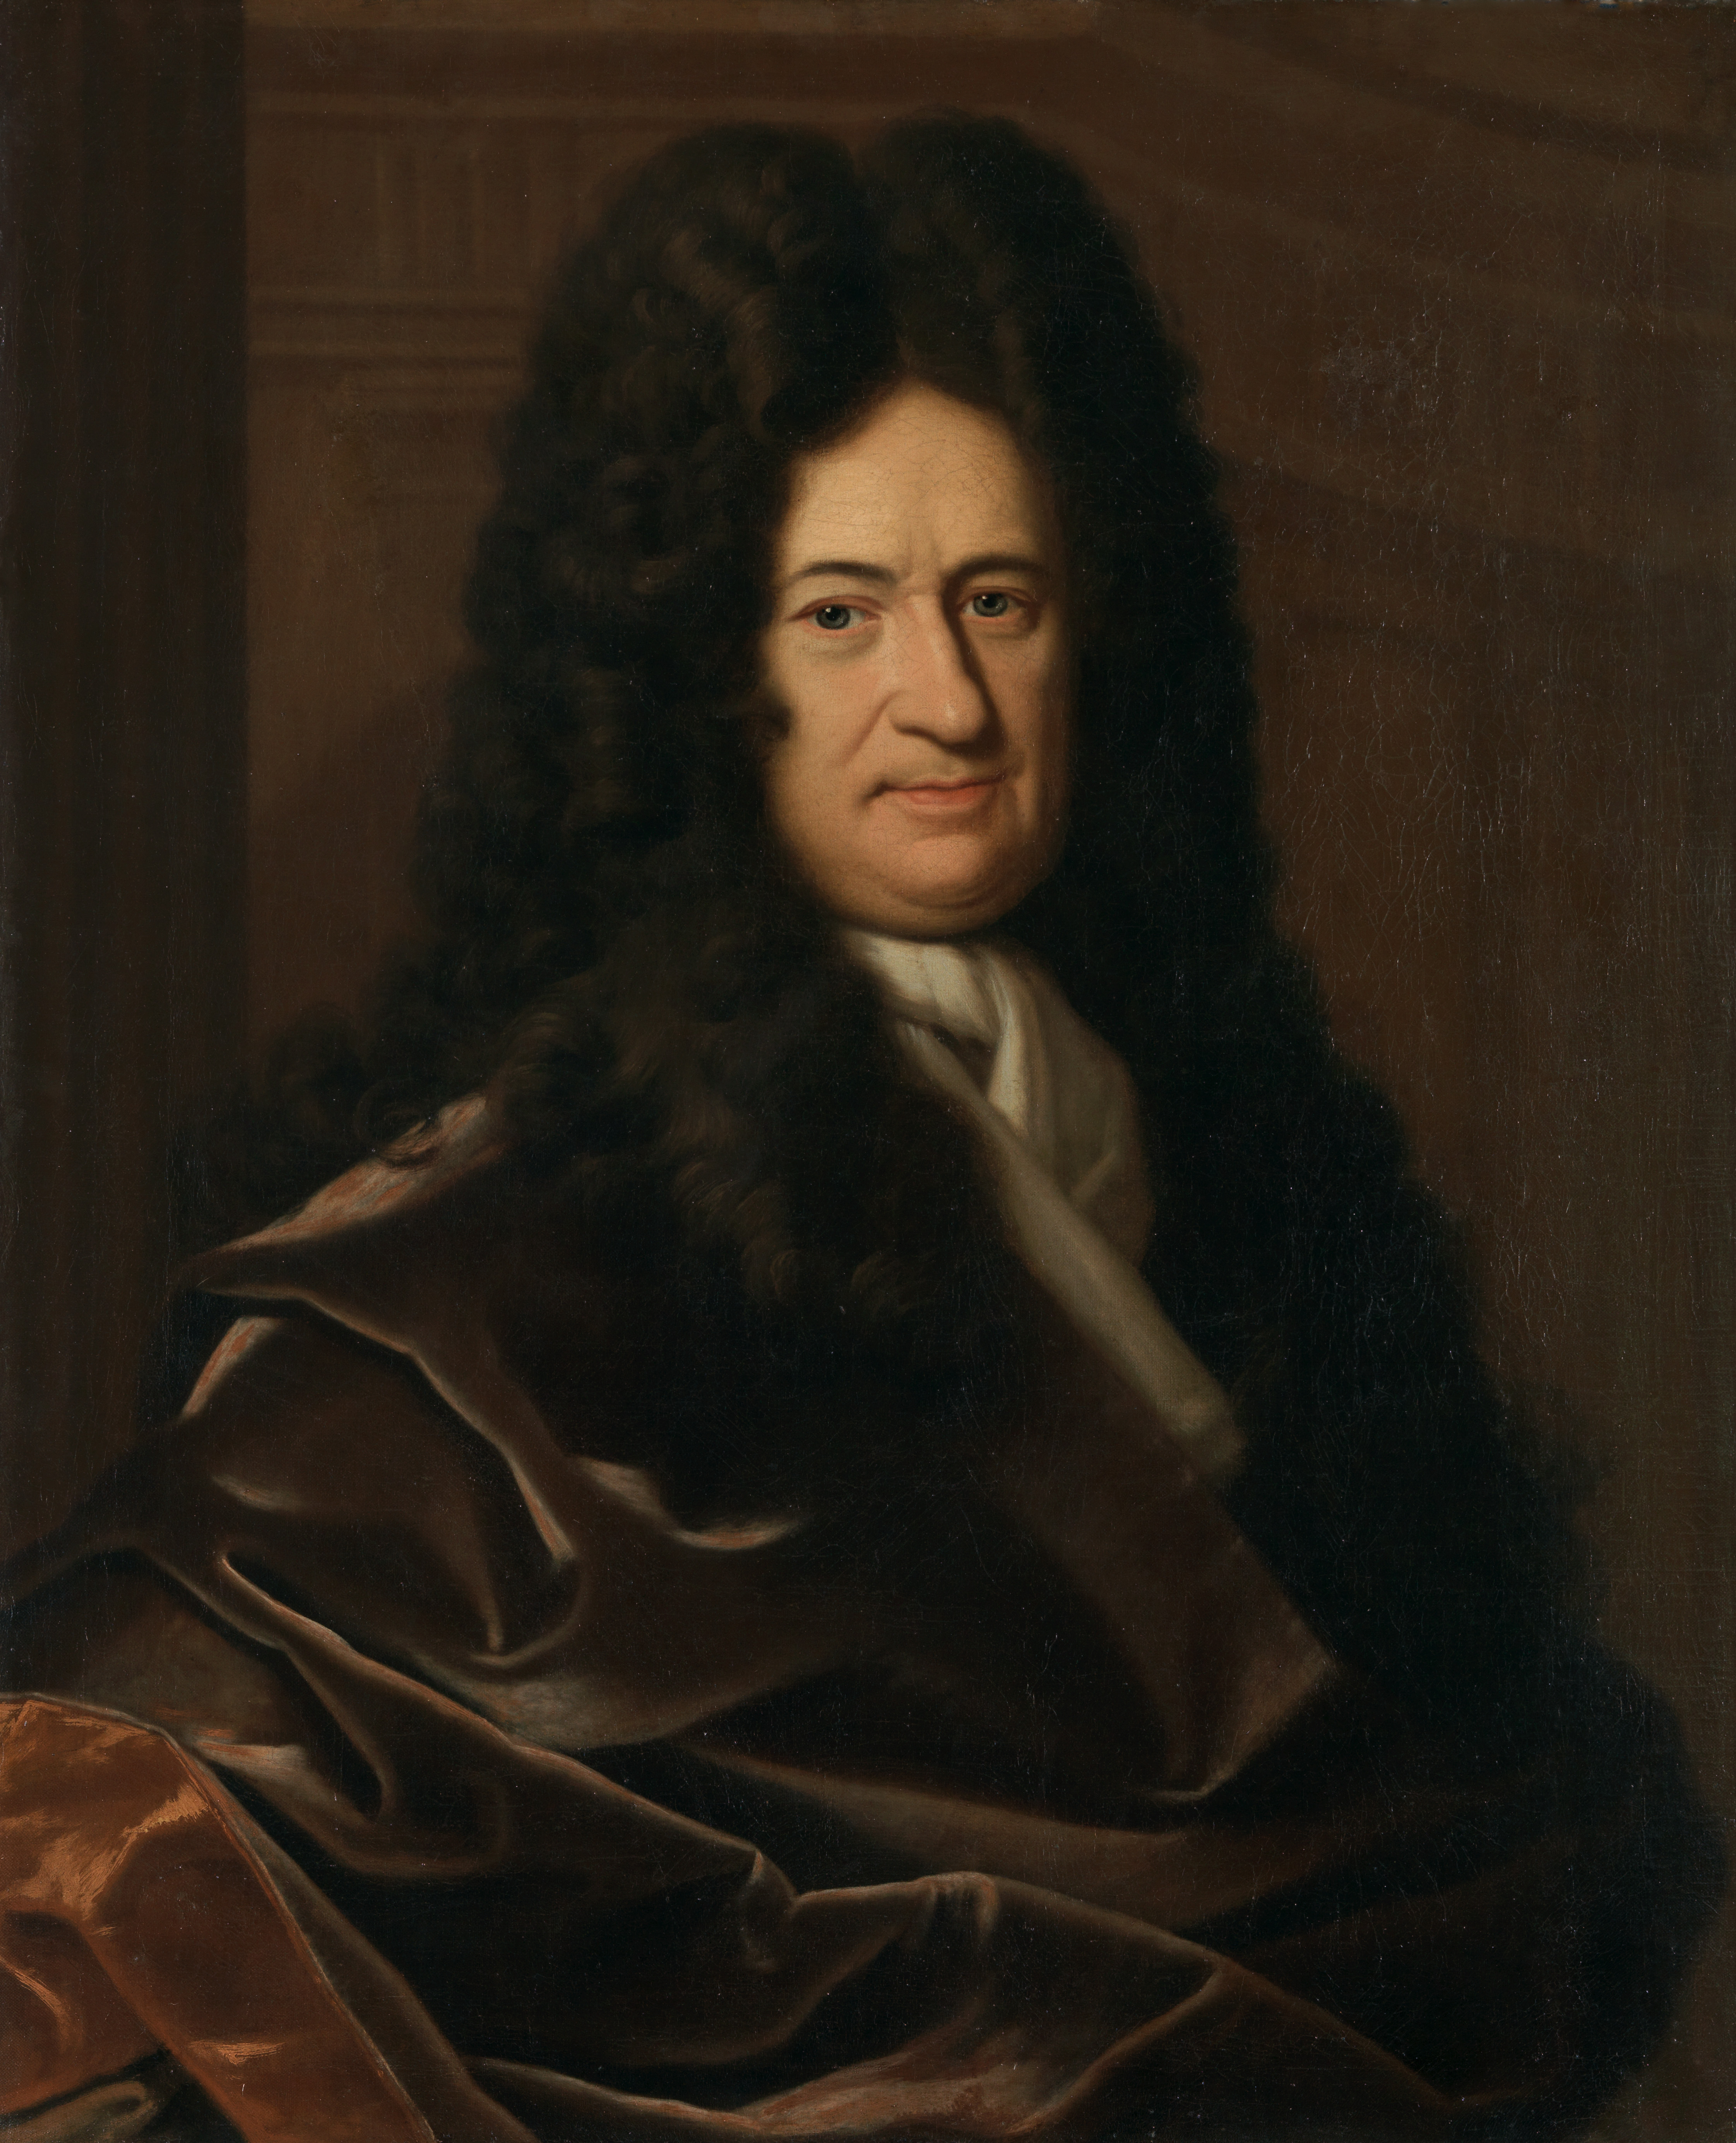 Christoph_Bernhard_Francke_-_Bildnis_des_Philosophen_Leibniz__ca._1695_.jpg